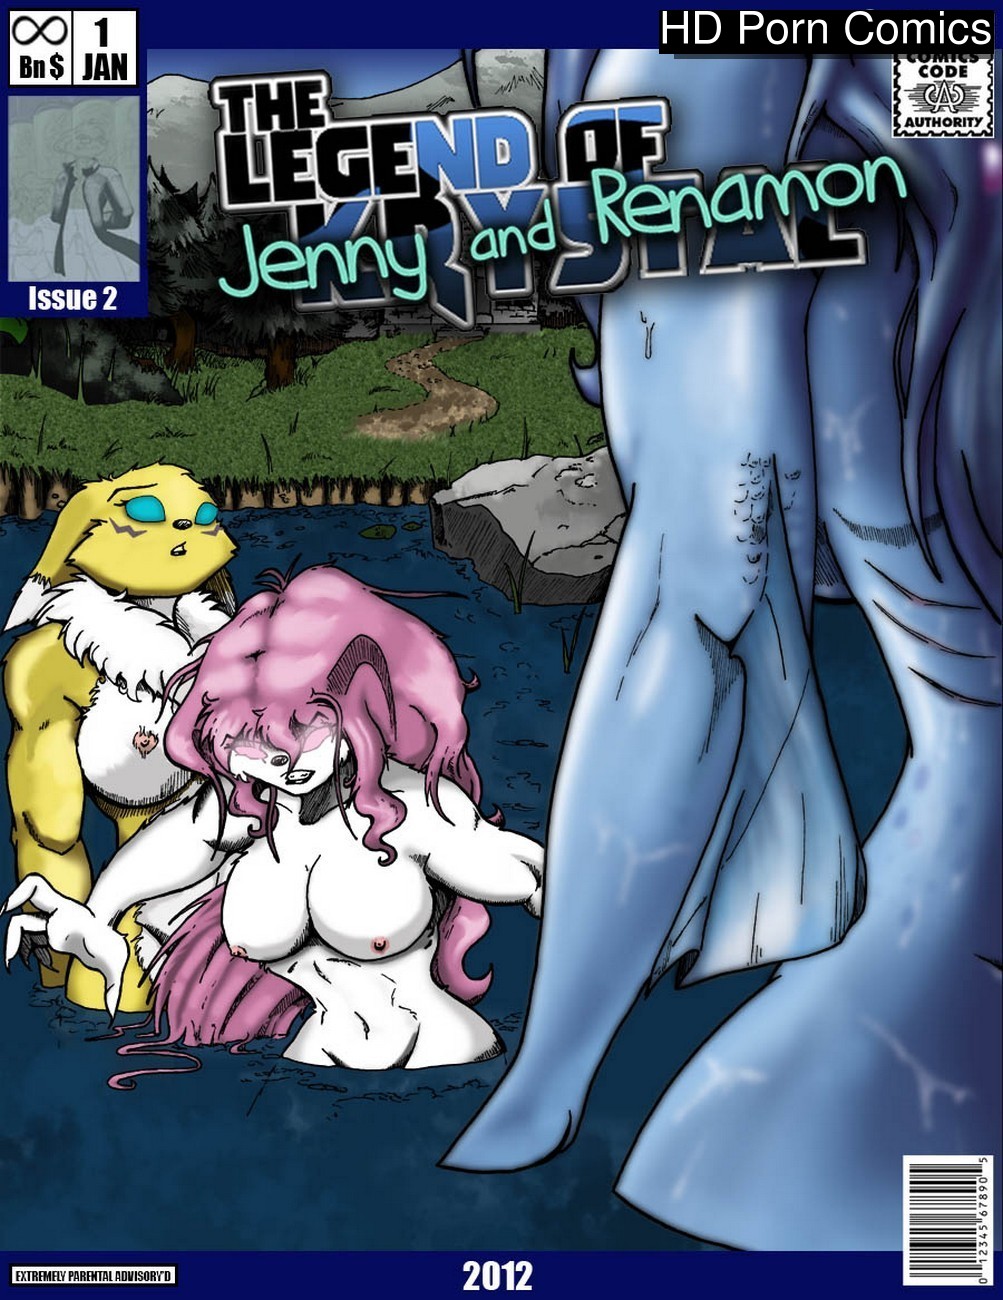 Furry Renamon Sex Slave Porn - The Legend Of Jenny And Renamon 2 Sex Comic - HD Porn Comics